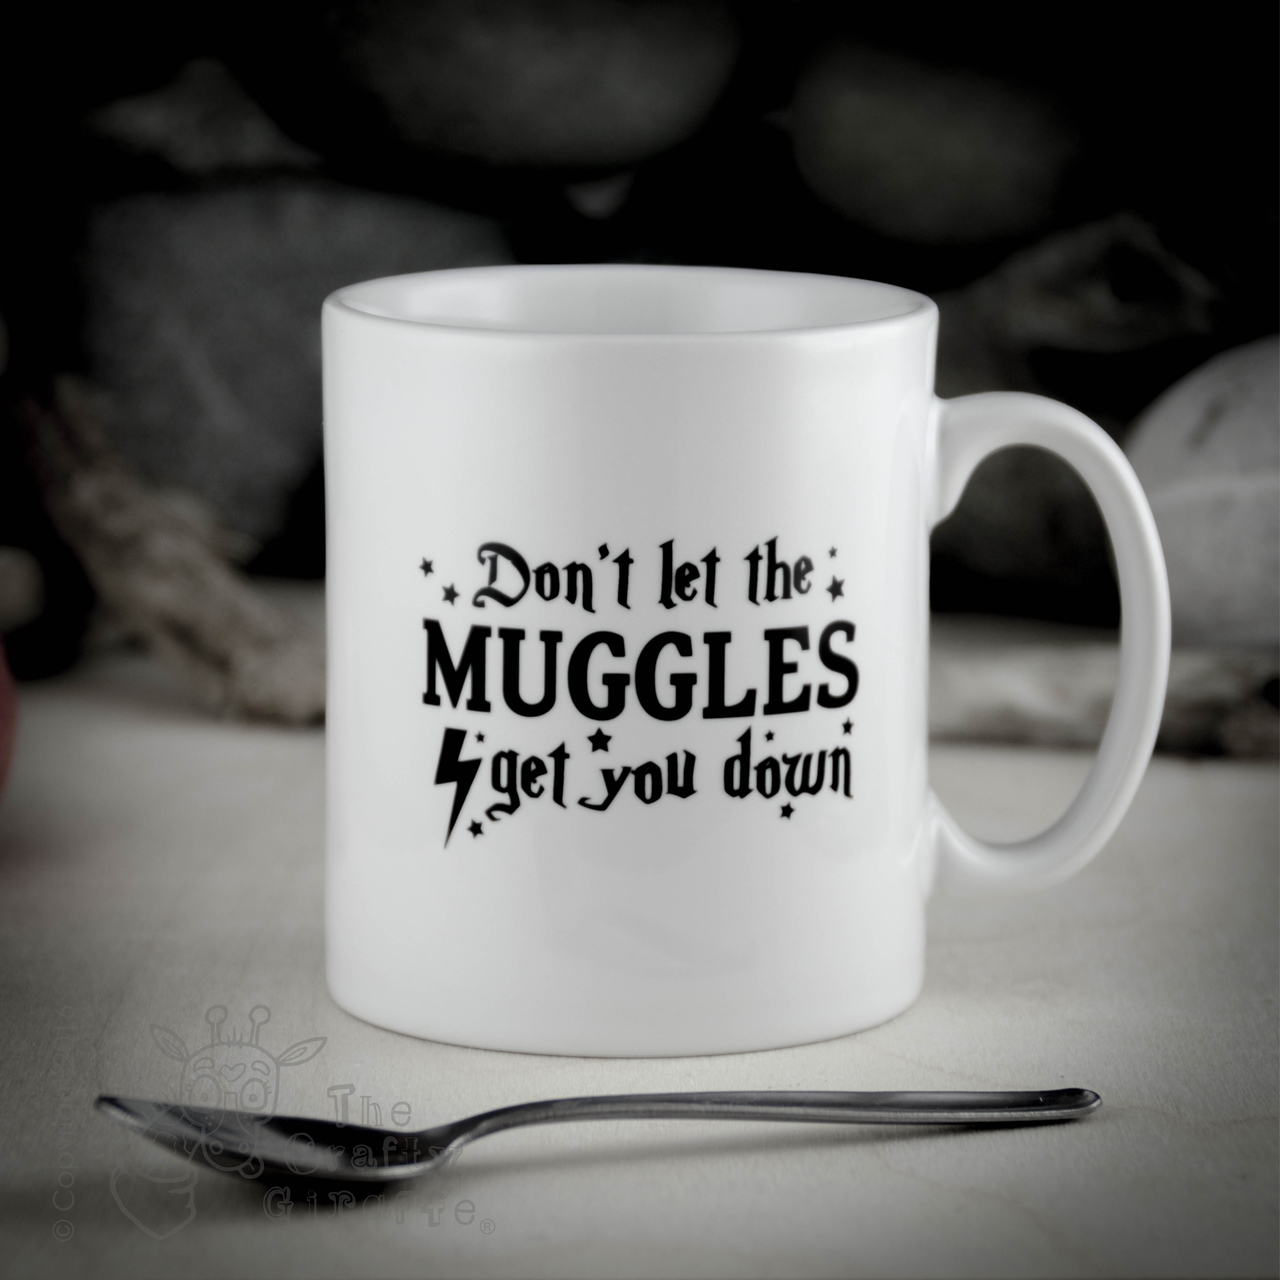 Don’t let the muggles get you down mug